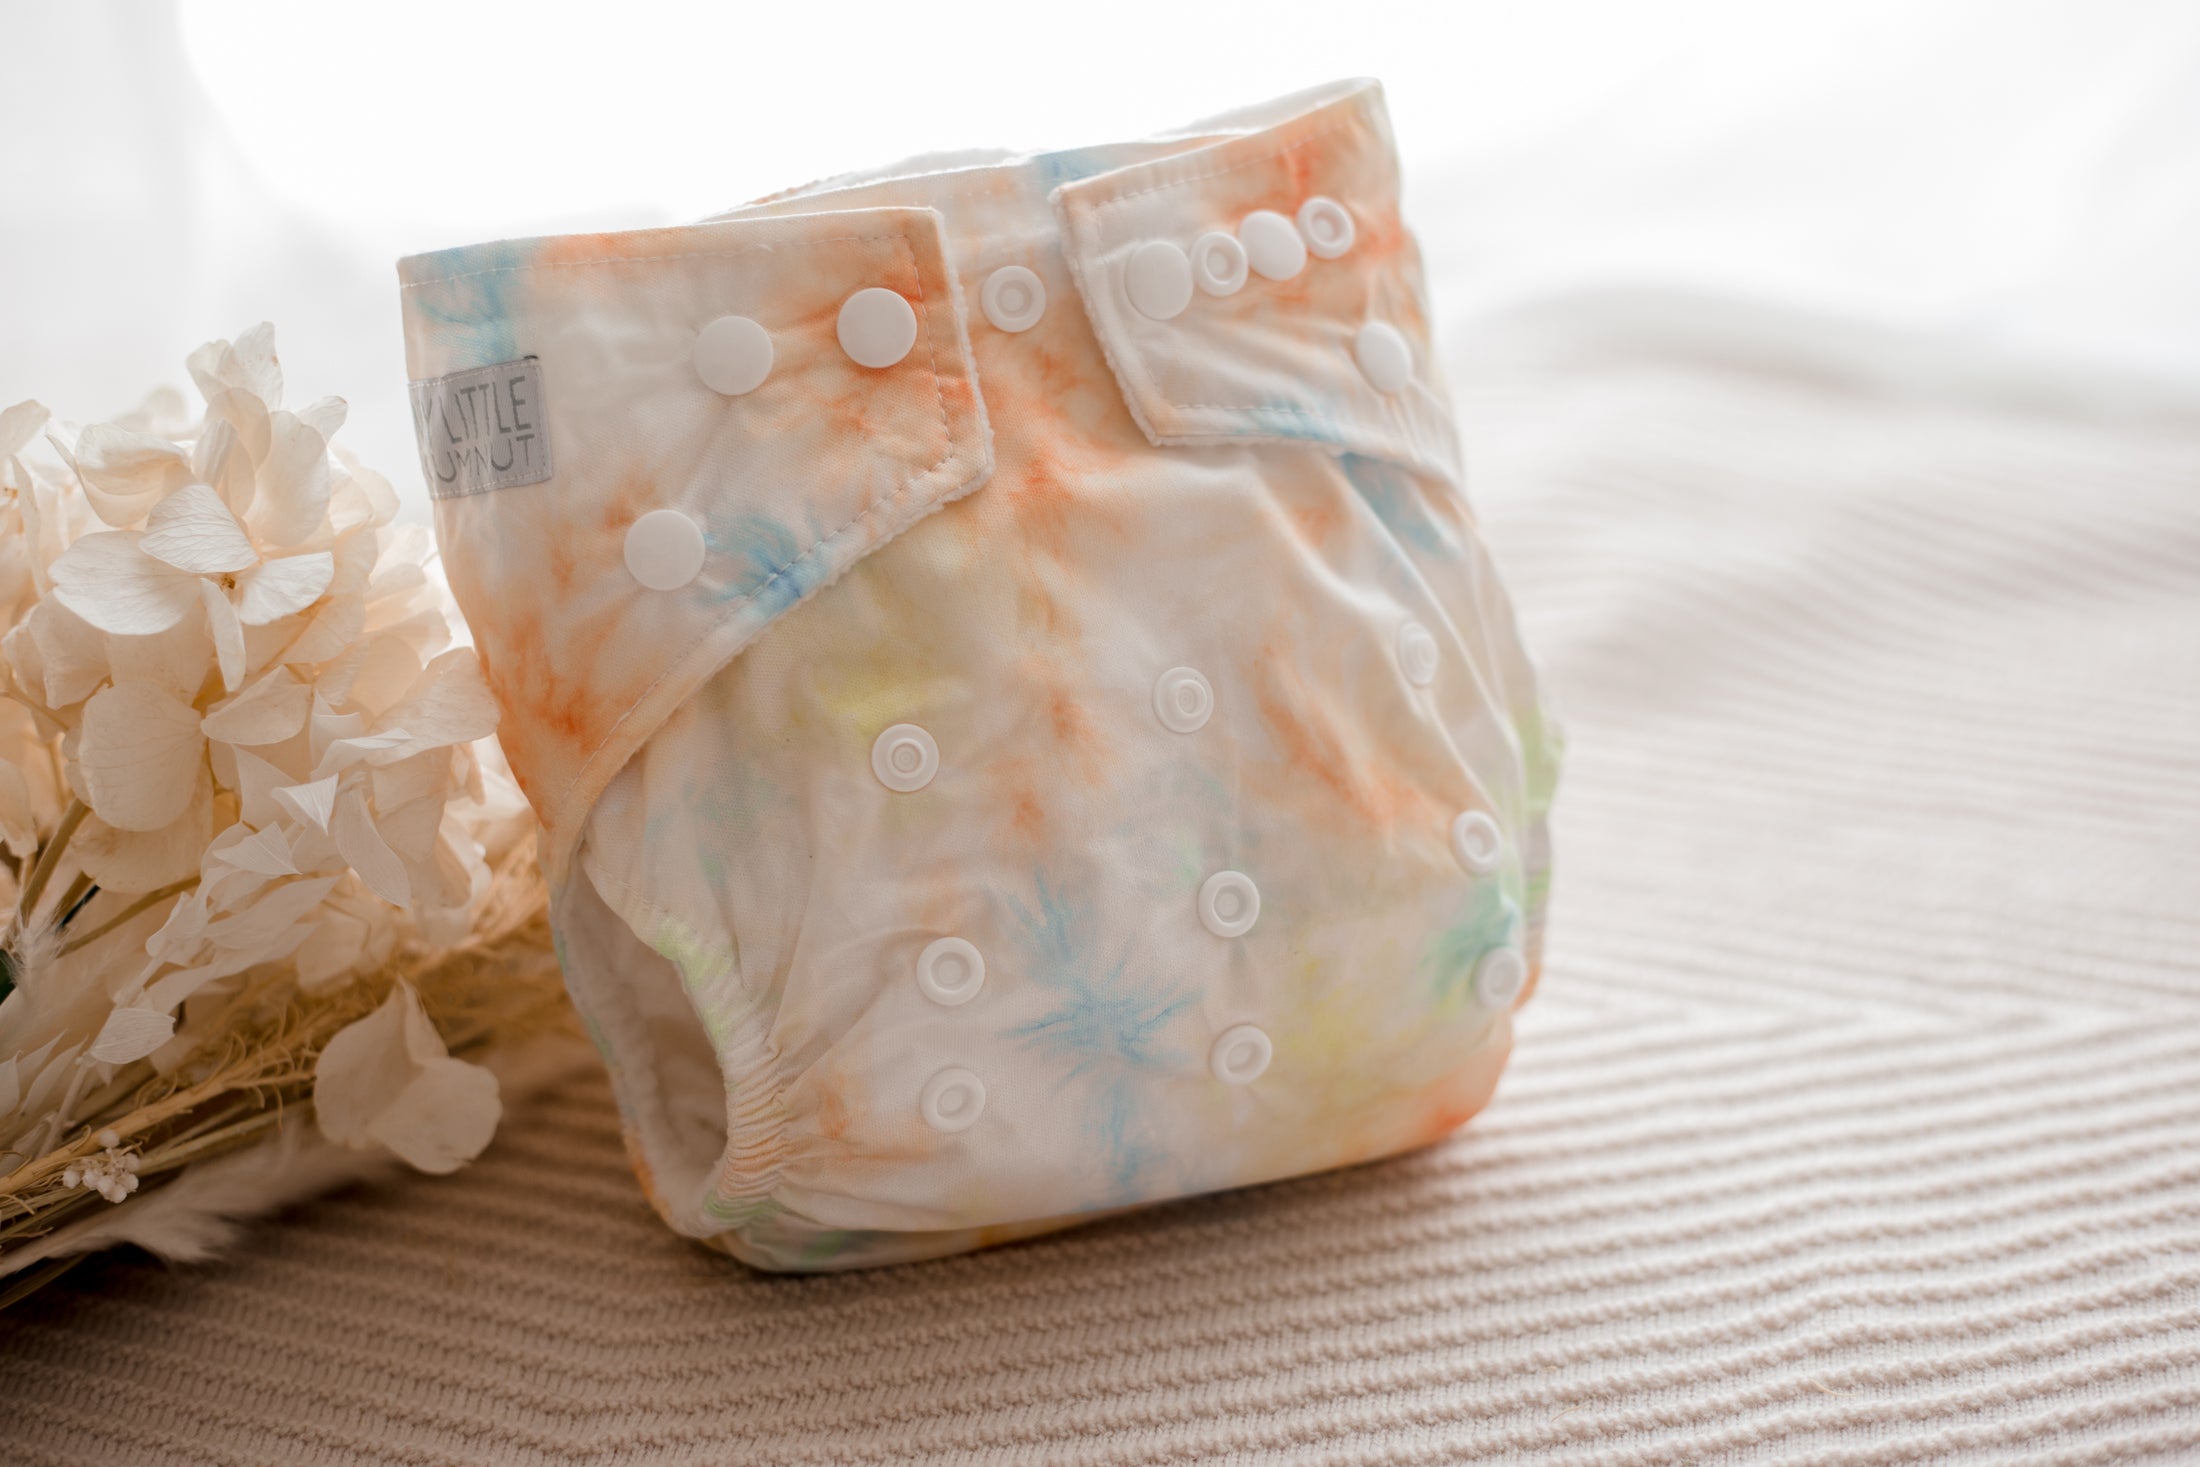 Australian cloth nappies. Reusable diapers. Tye dye cloth nappy. My little gumnut. reusable nappies australia.